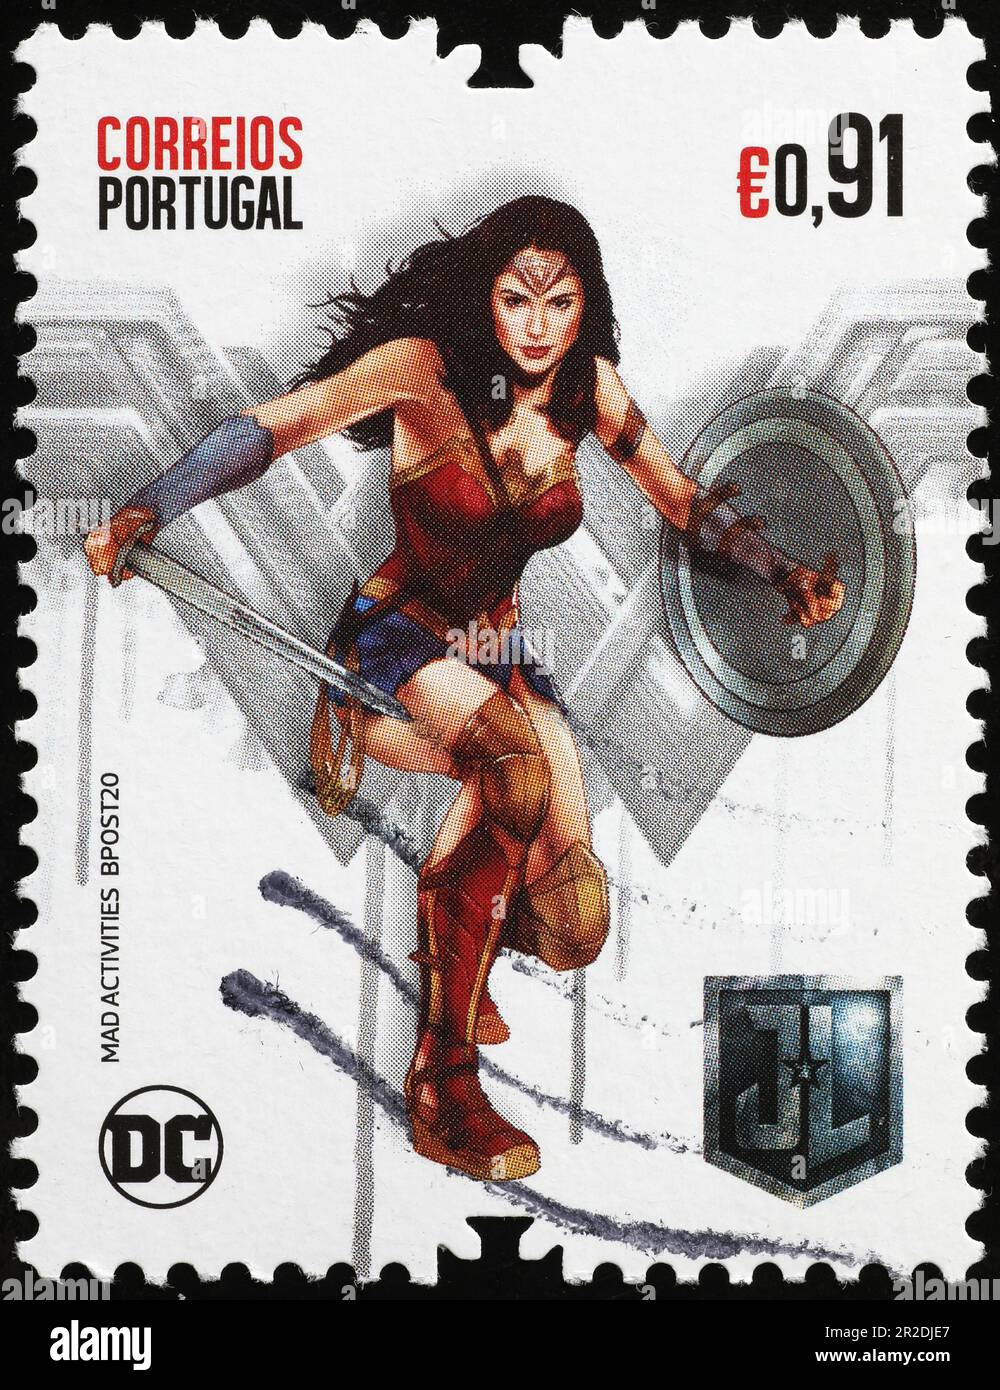 Wonder woman on portuguese postage stamp Stock Photo